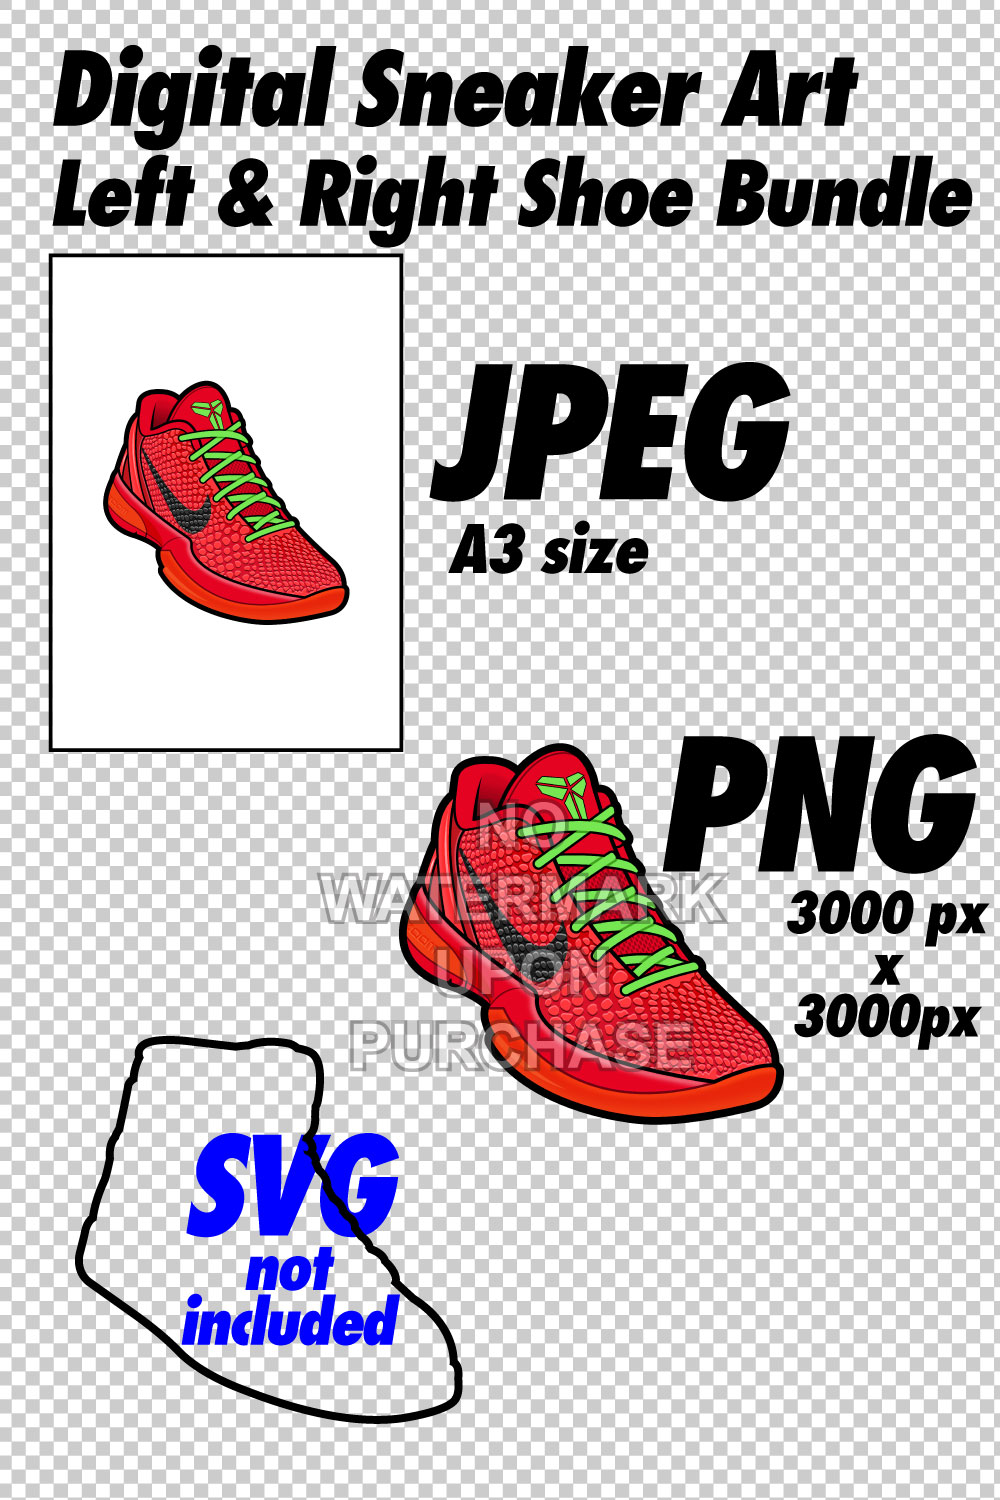 Kobe 6 Reverse Grinch JPEG PNG right & left shoe bundle sneaker art pinterest preview image.